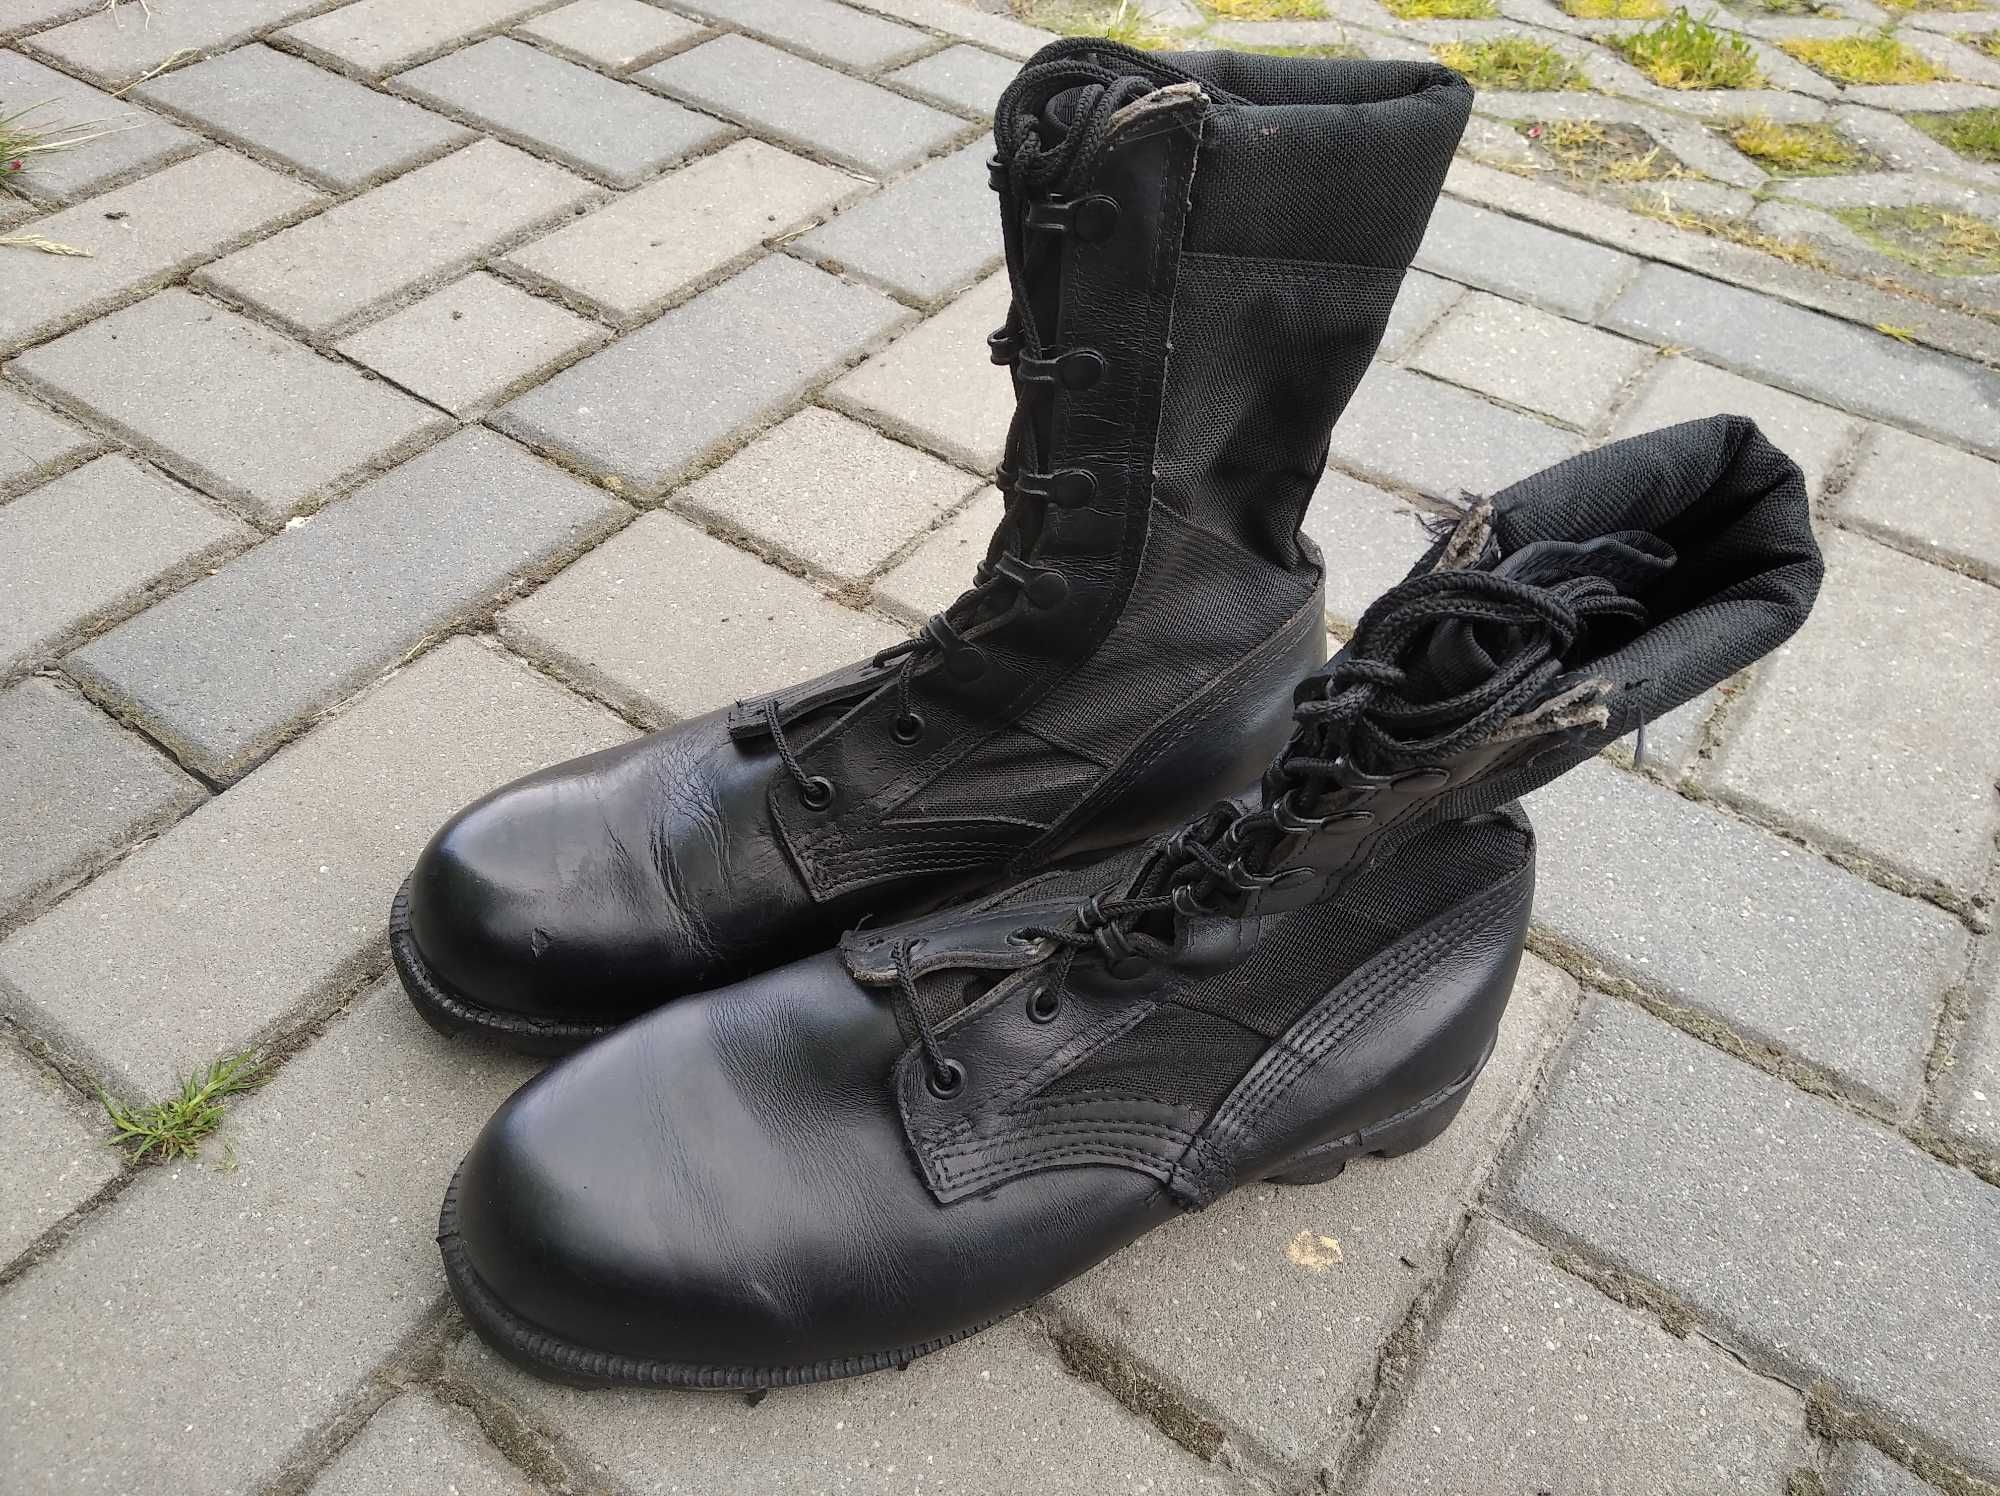 Buty wojskowe US Army Altama Jungle Boots 7.5W bdb